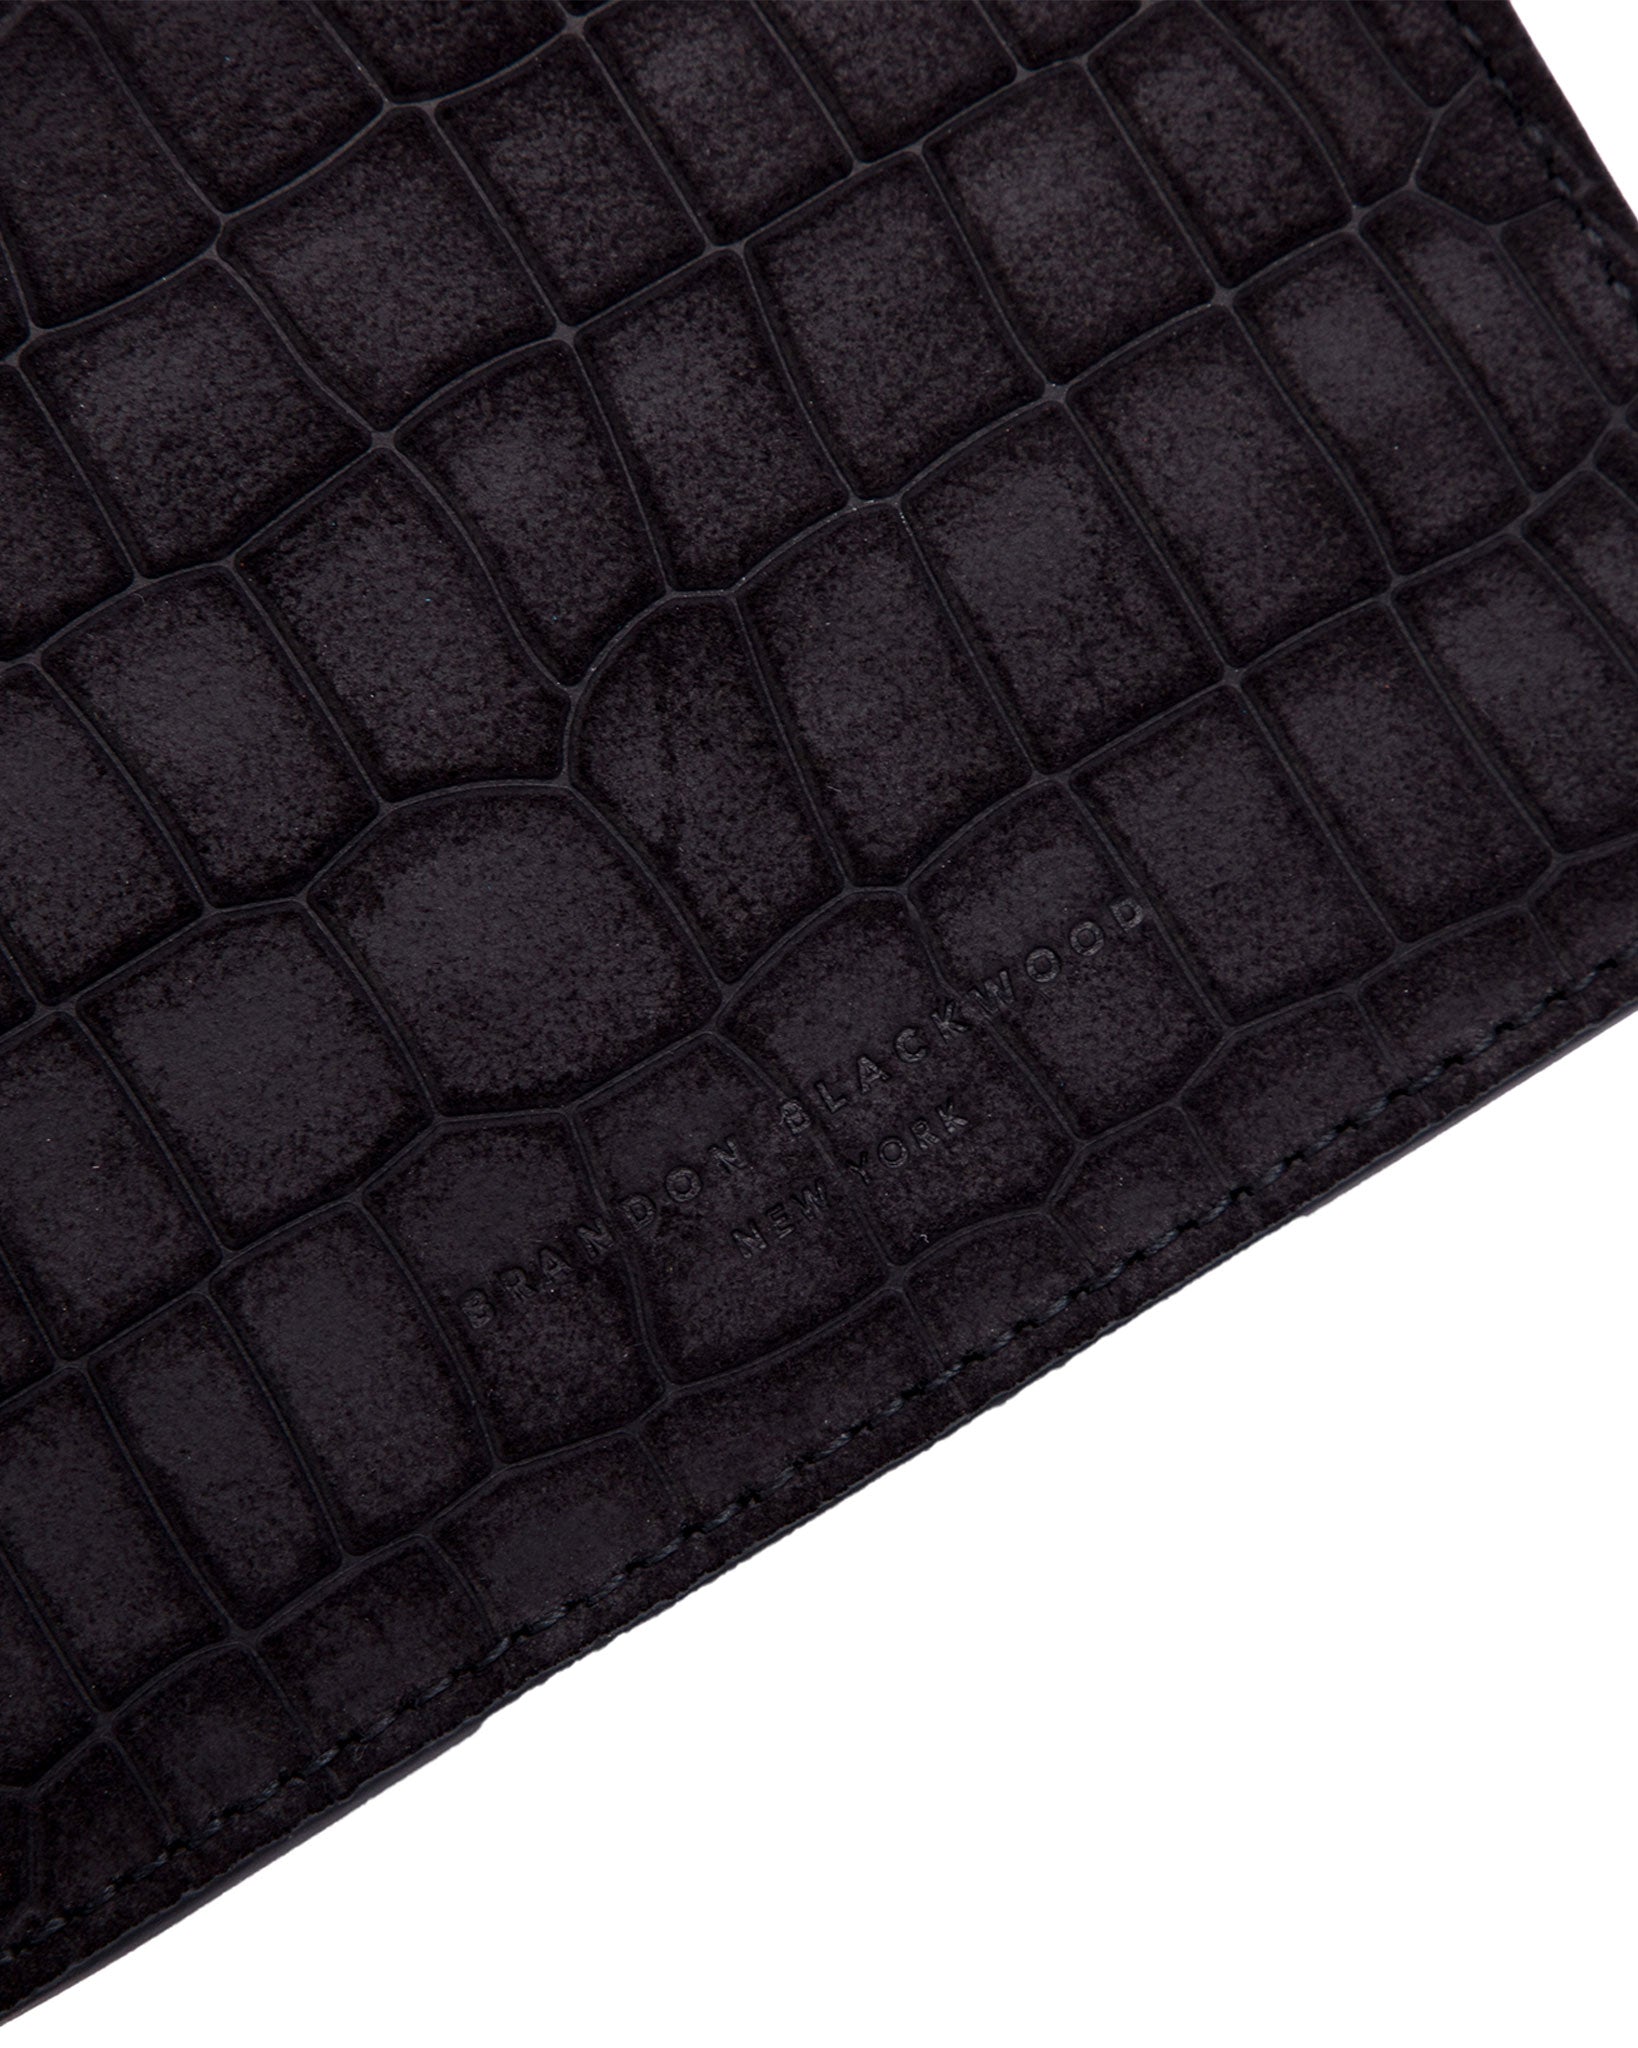 Brandon Blackwood New York - Mini Sophia Bag - Black Embossed Croc Suede w/ Gold Hardware